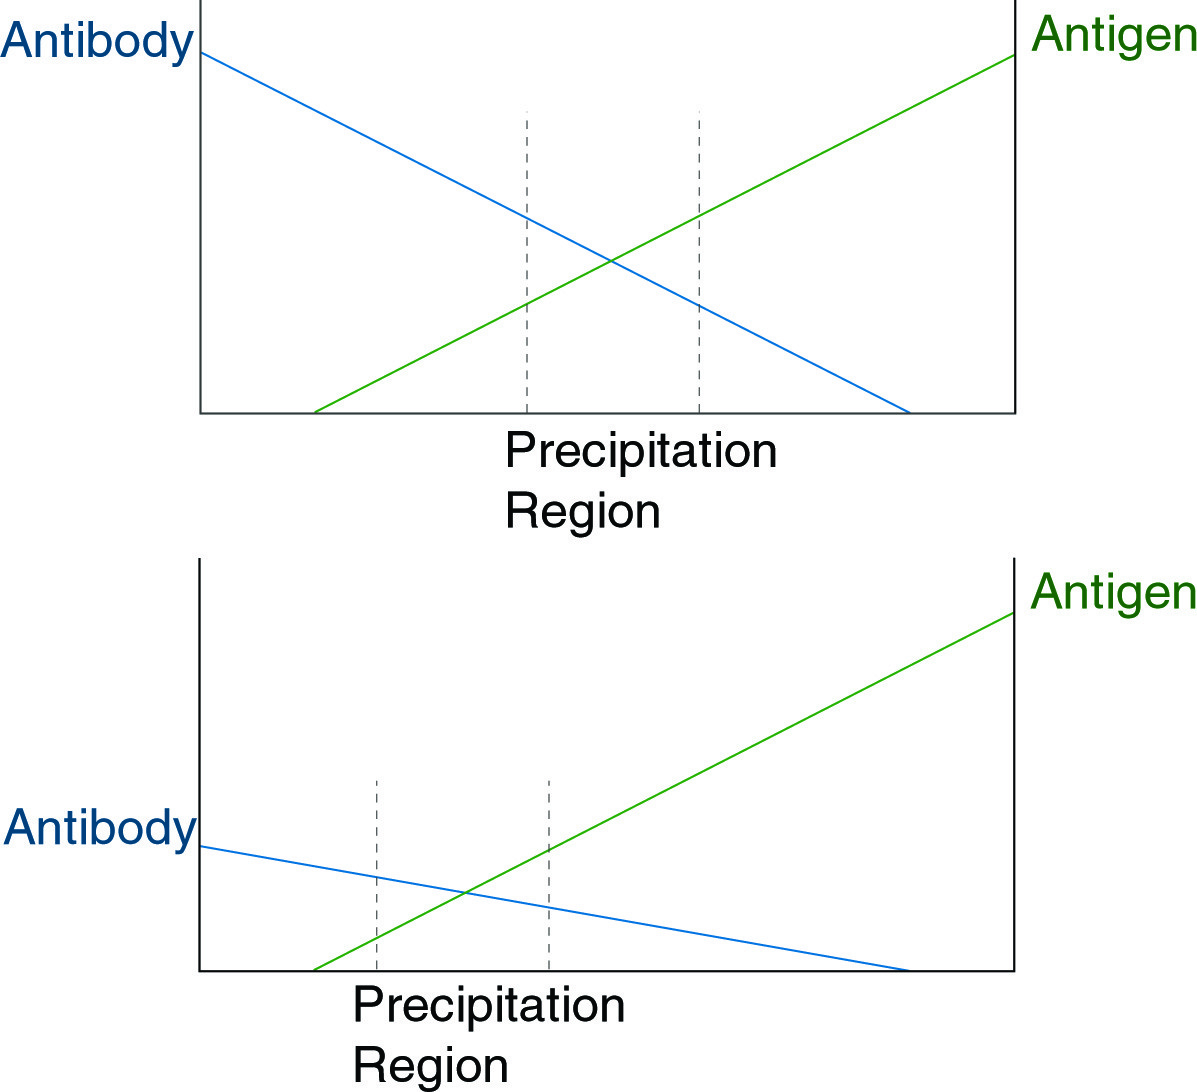 Precipitation in antigen plus antibody solutions